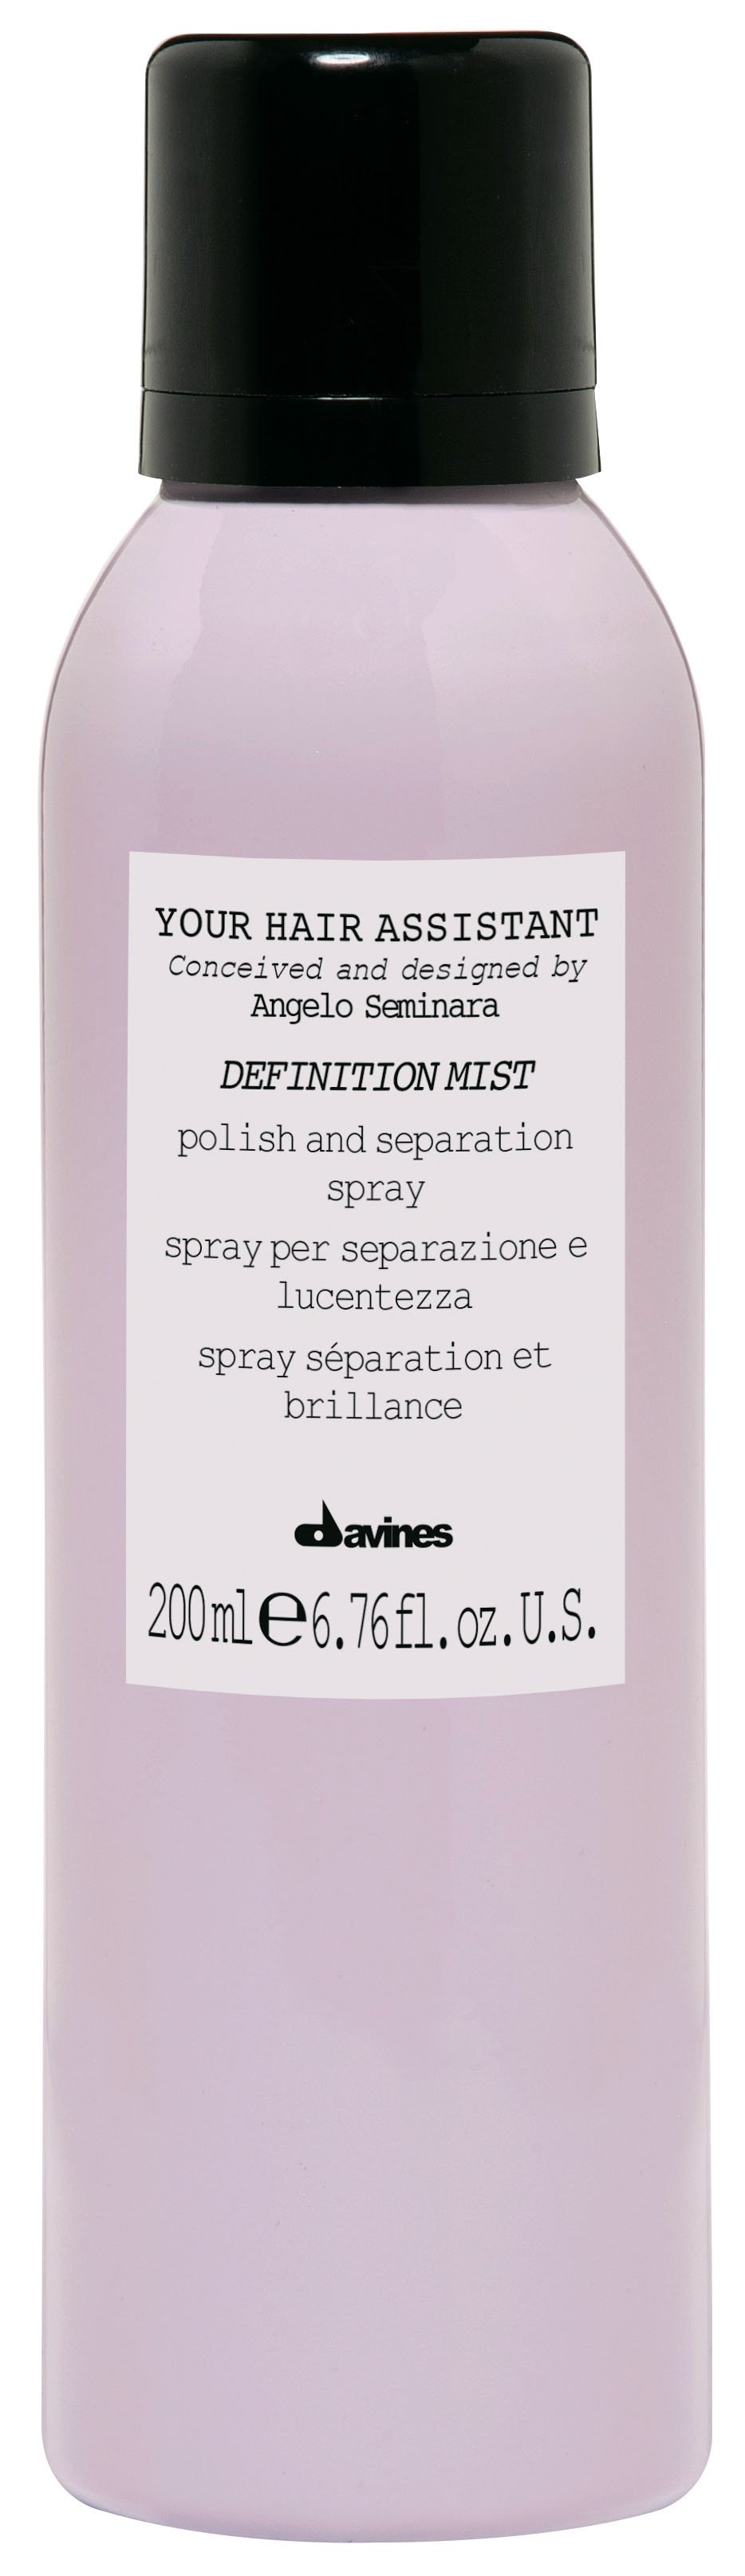 Davines your hair assistant blowdry primer спрей-праймер для укладки волос